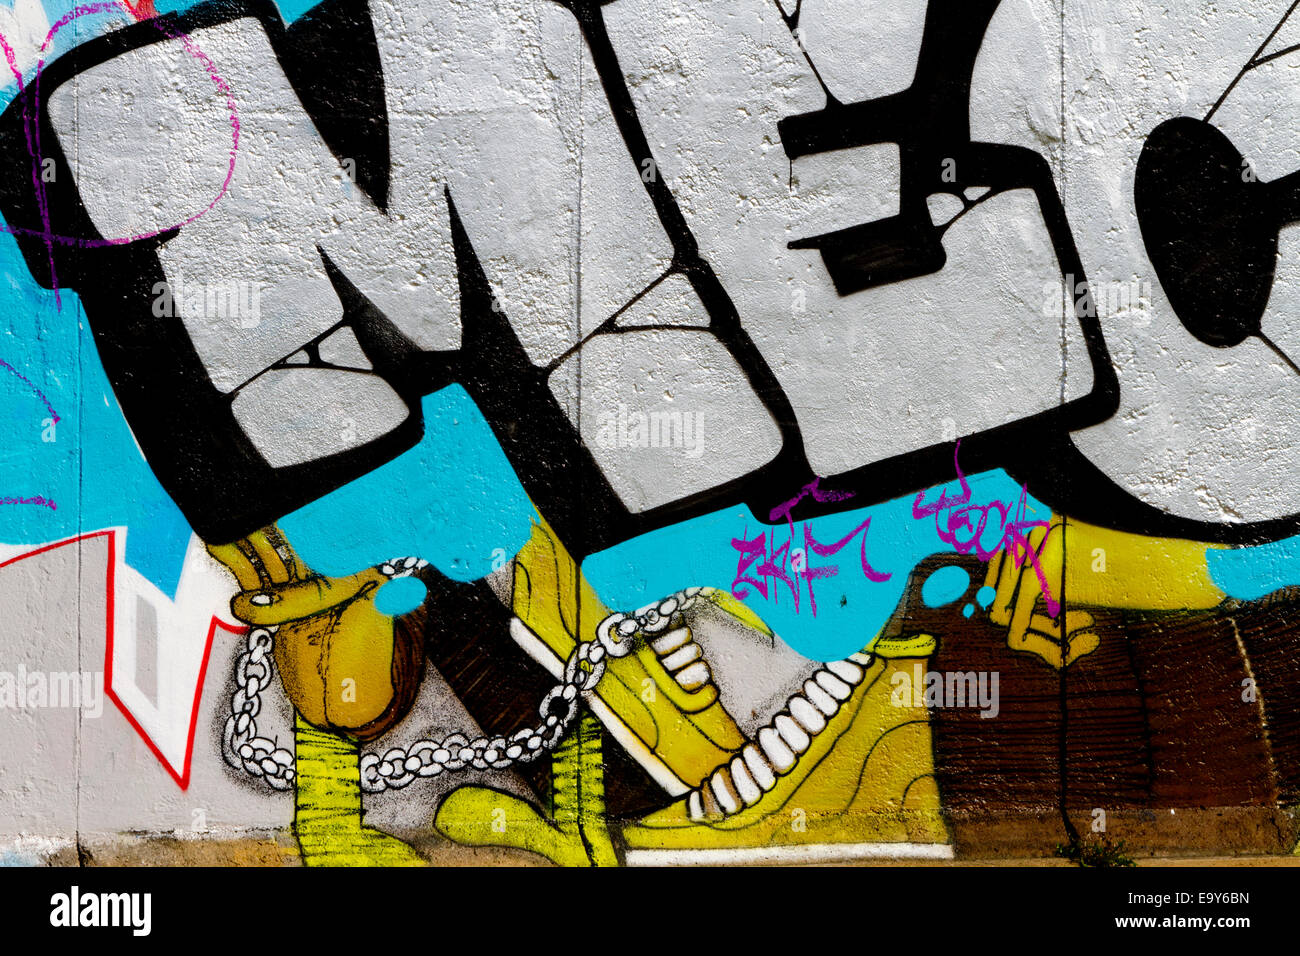 Graffiti Berlin wall art tag urban colour trainers Stock Photo